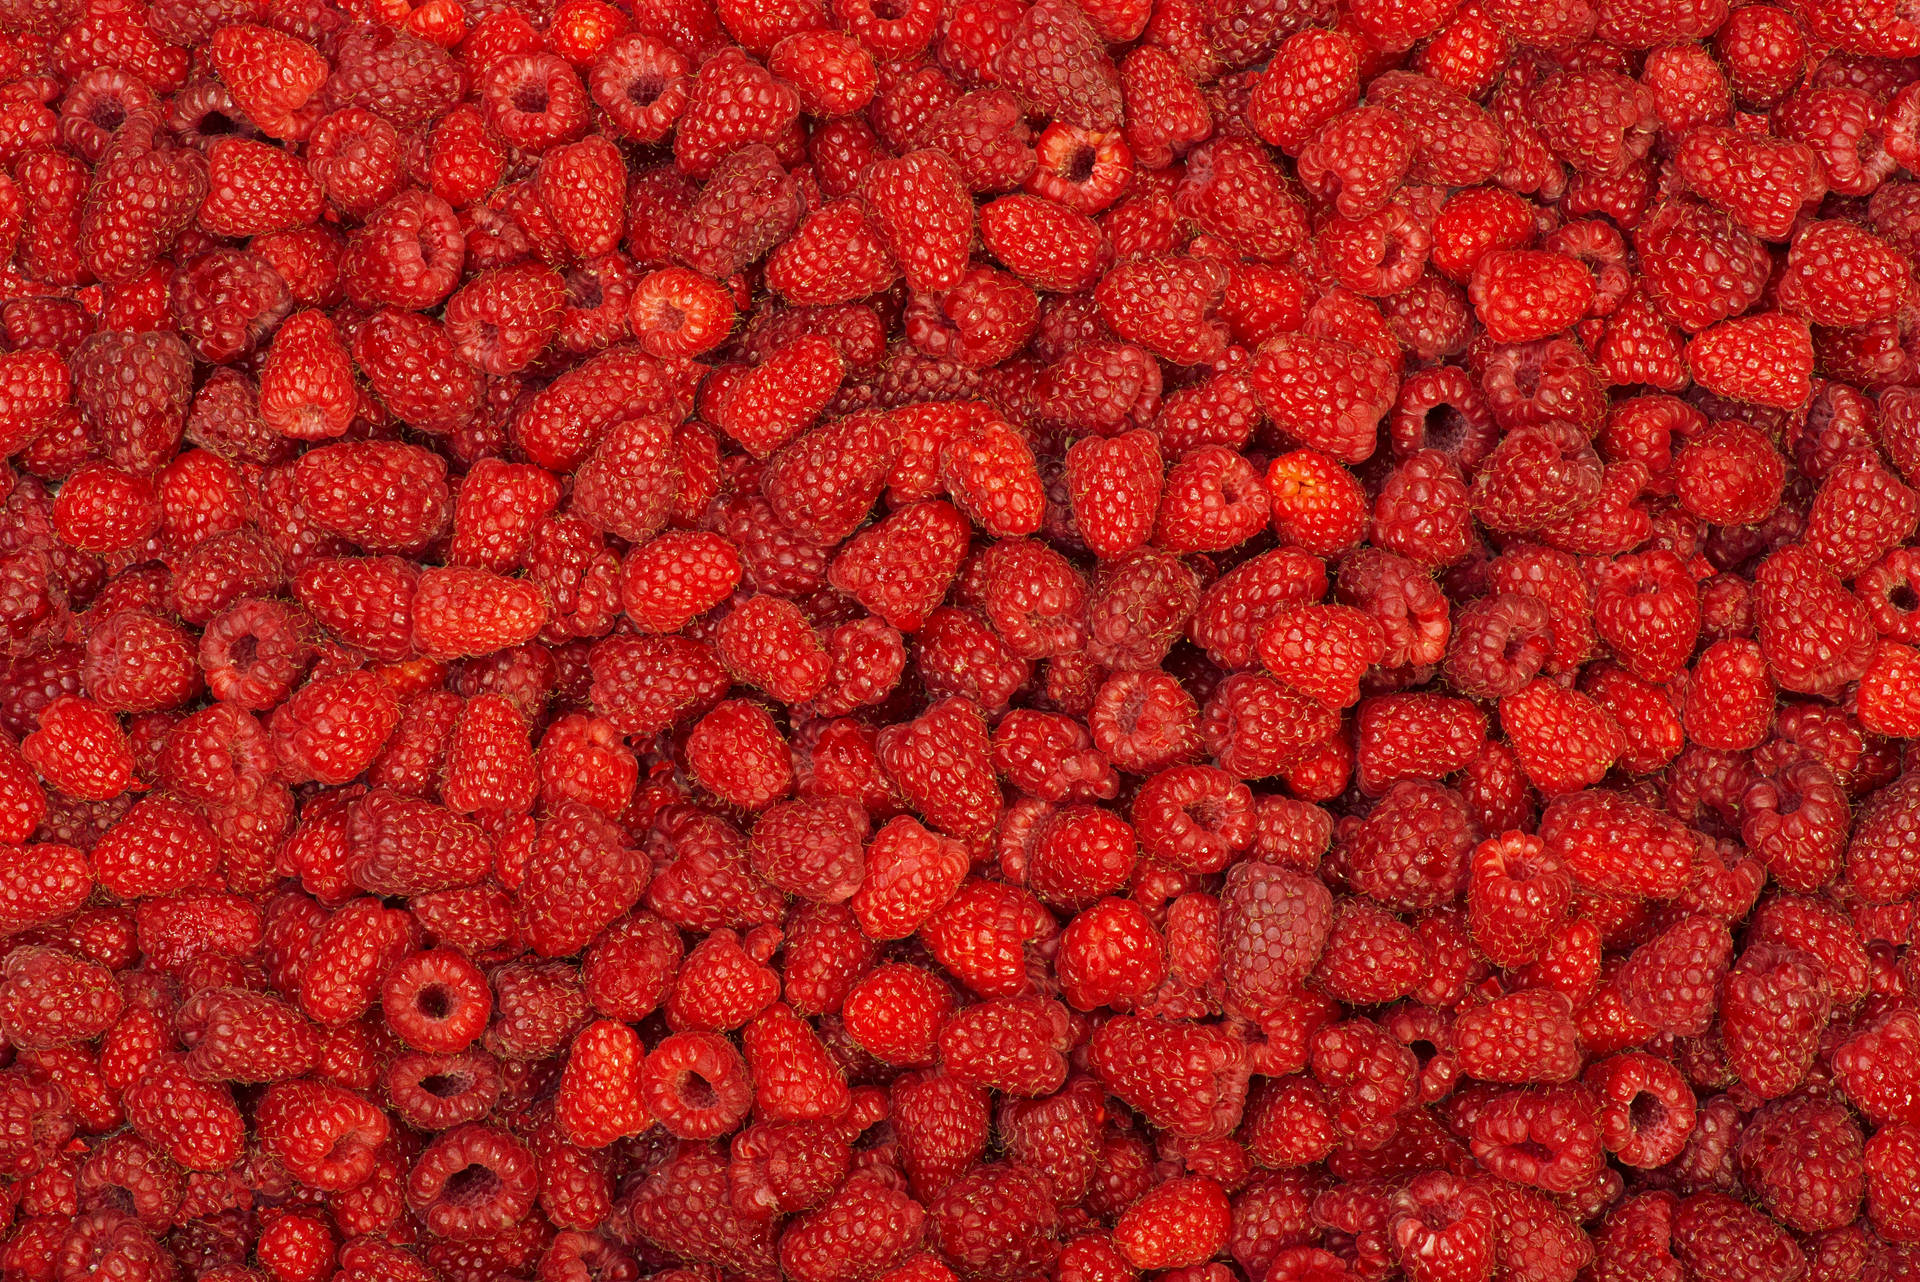 Red 4k Uhd Raspberries Fruit Background